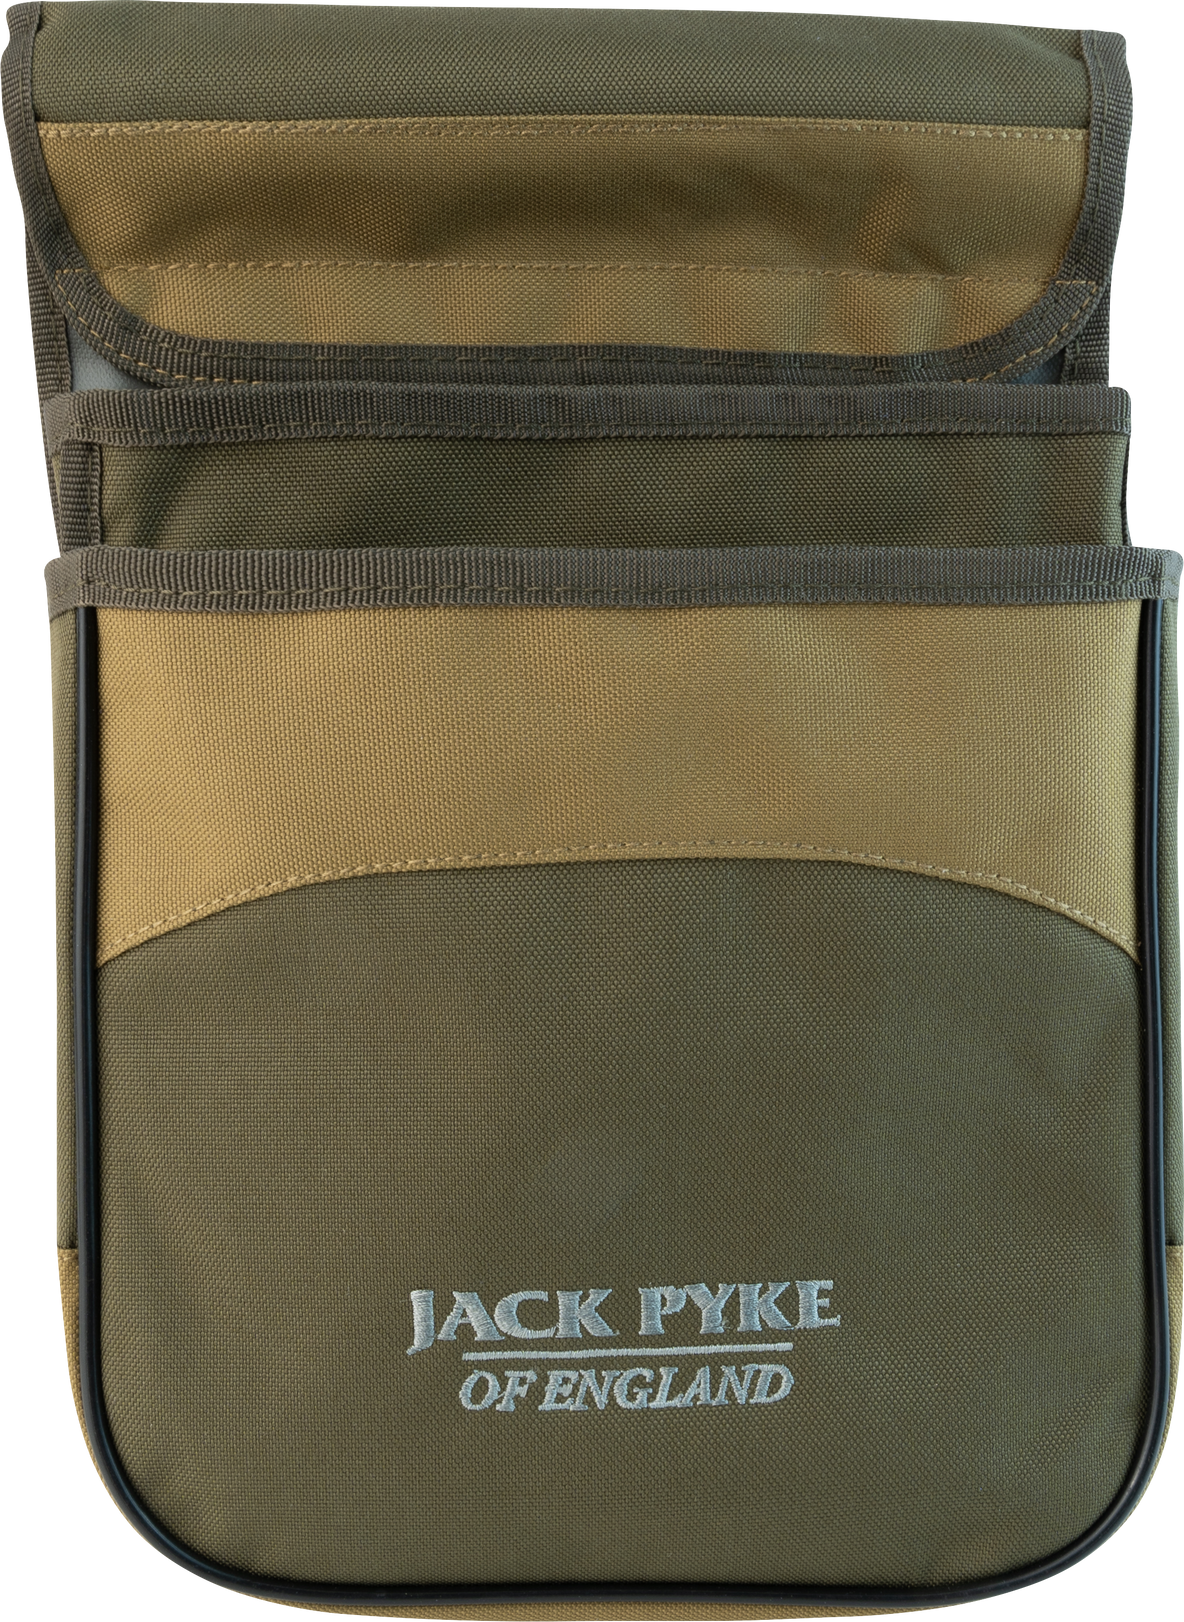 Jack Pyke Sporting Cartridge Pouch in Green 